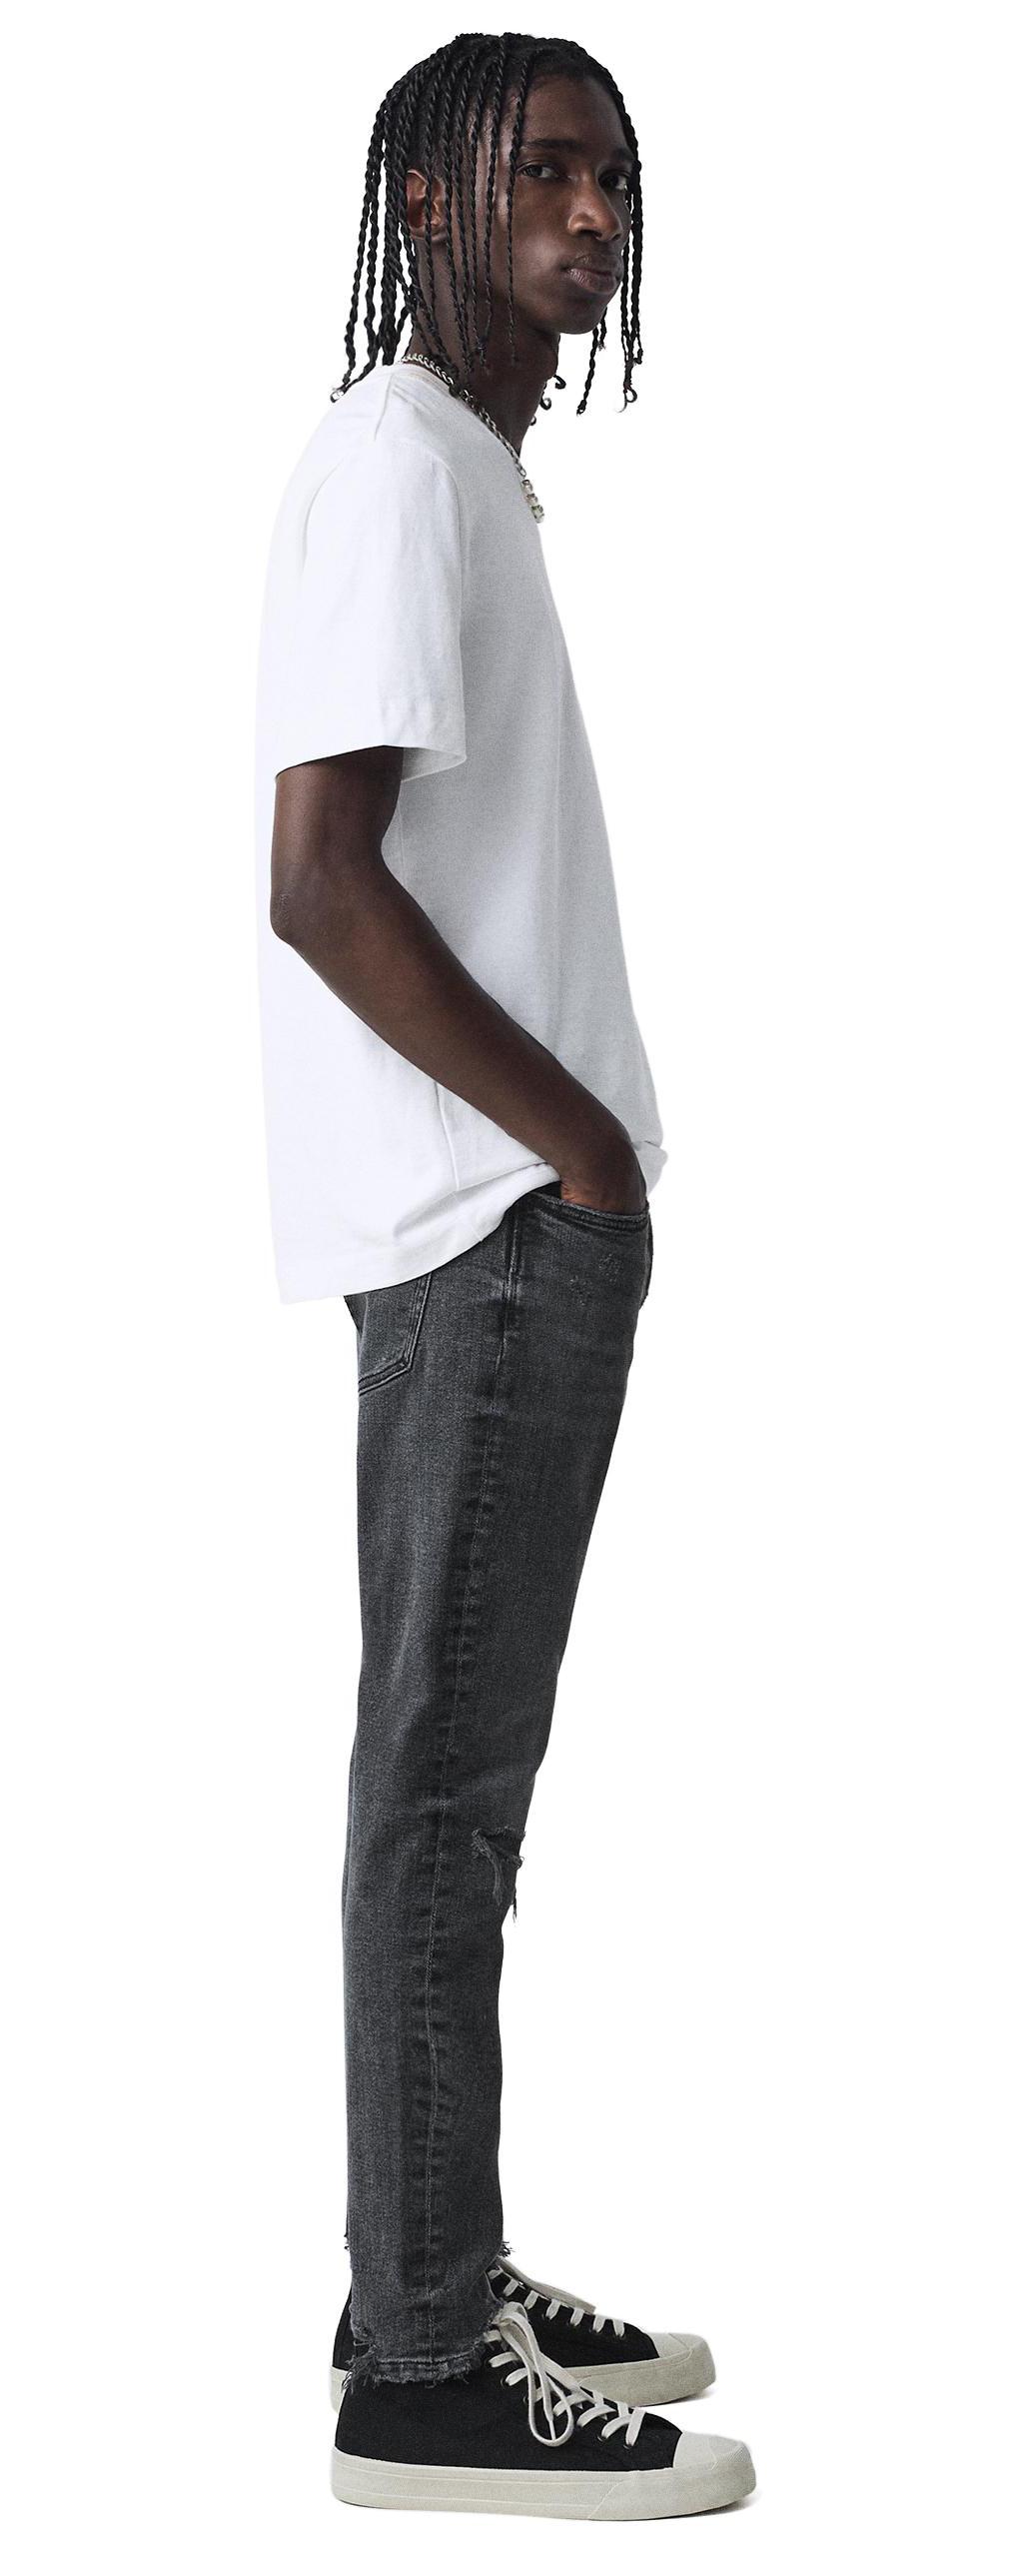 Super Skinny Spray on stretch Jeans - Black ripped – Neutrl Clothing